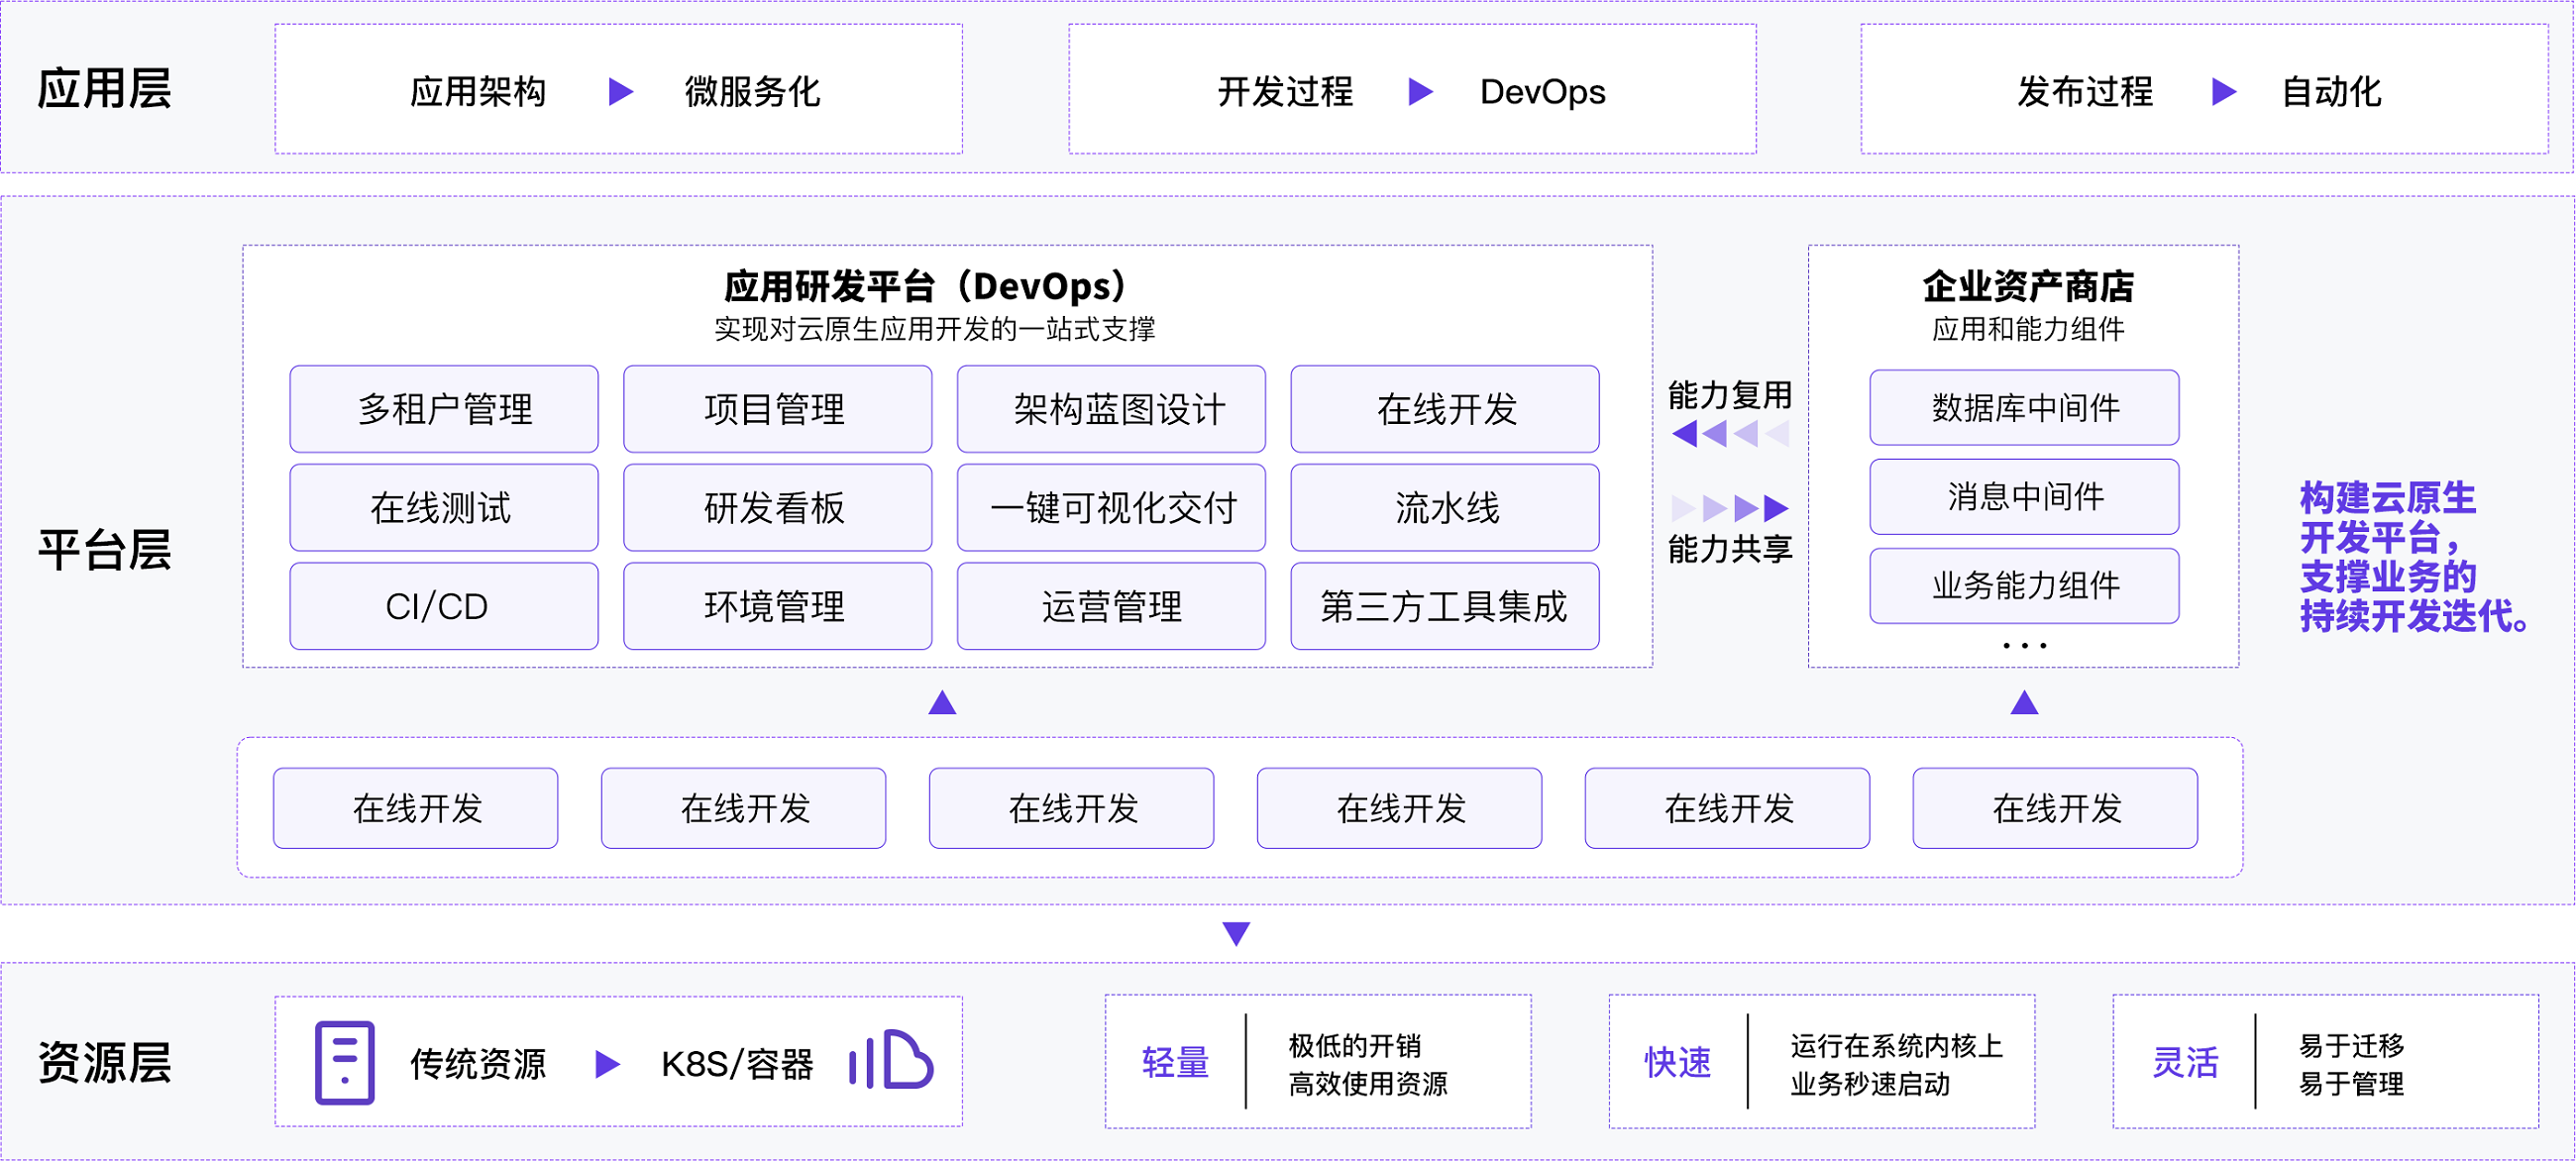 DevOps平台架构图